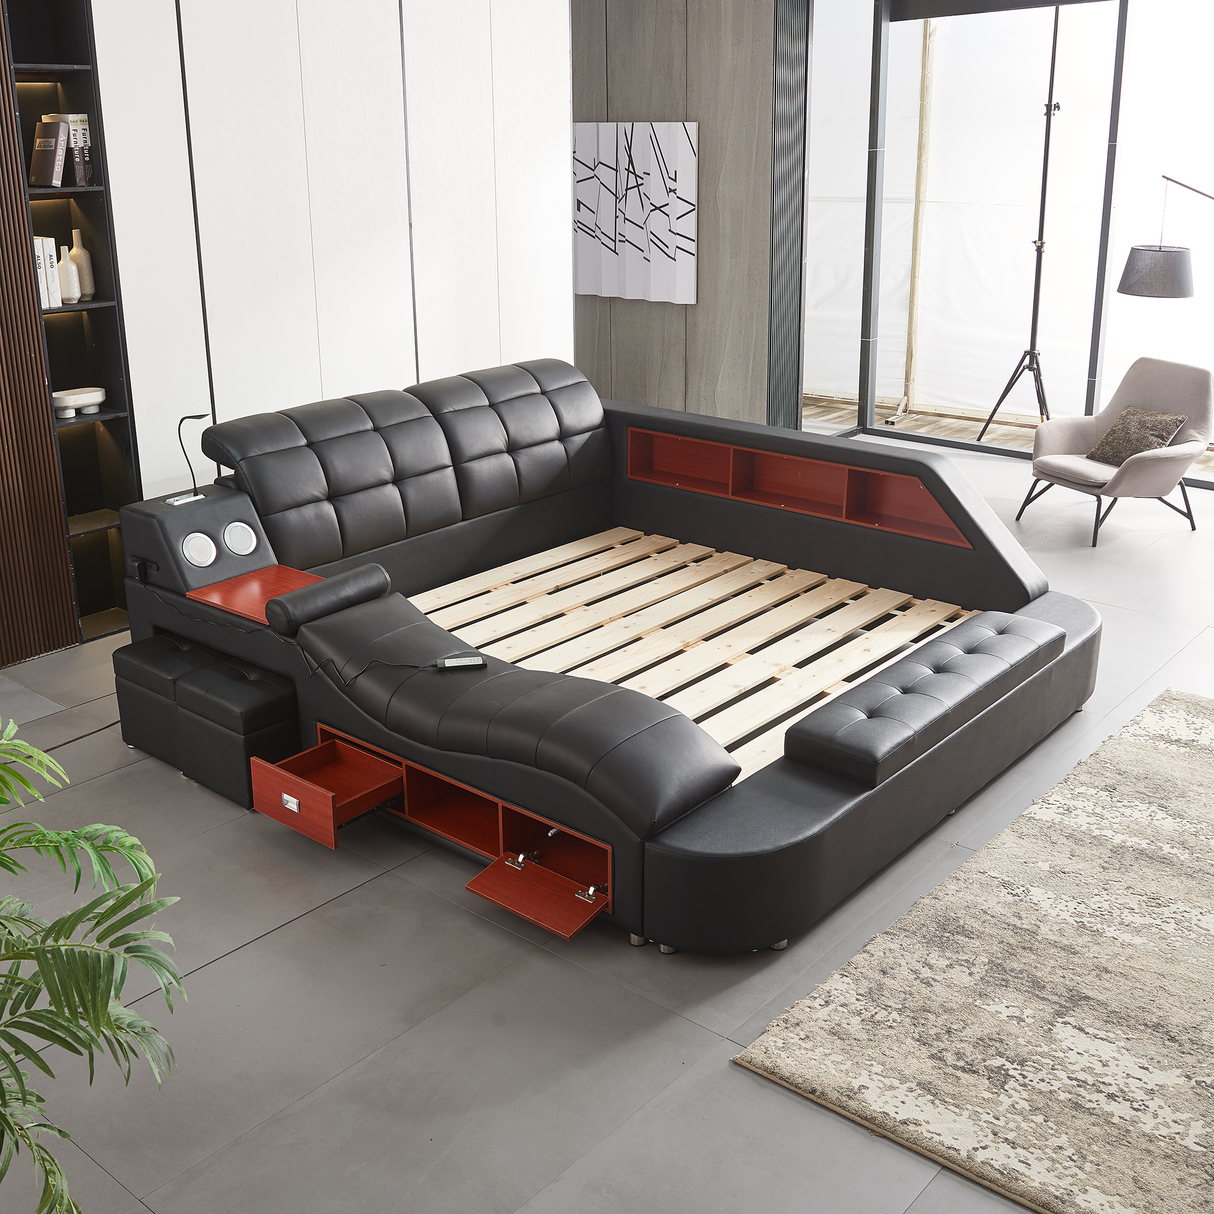 Multifunctional Upholstered Storage Bed Frame, Massage Chaise Lounge on Left, King Size, Black - Home Elegance USA